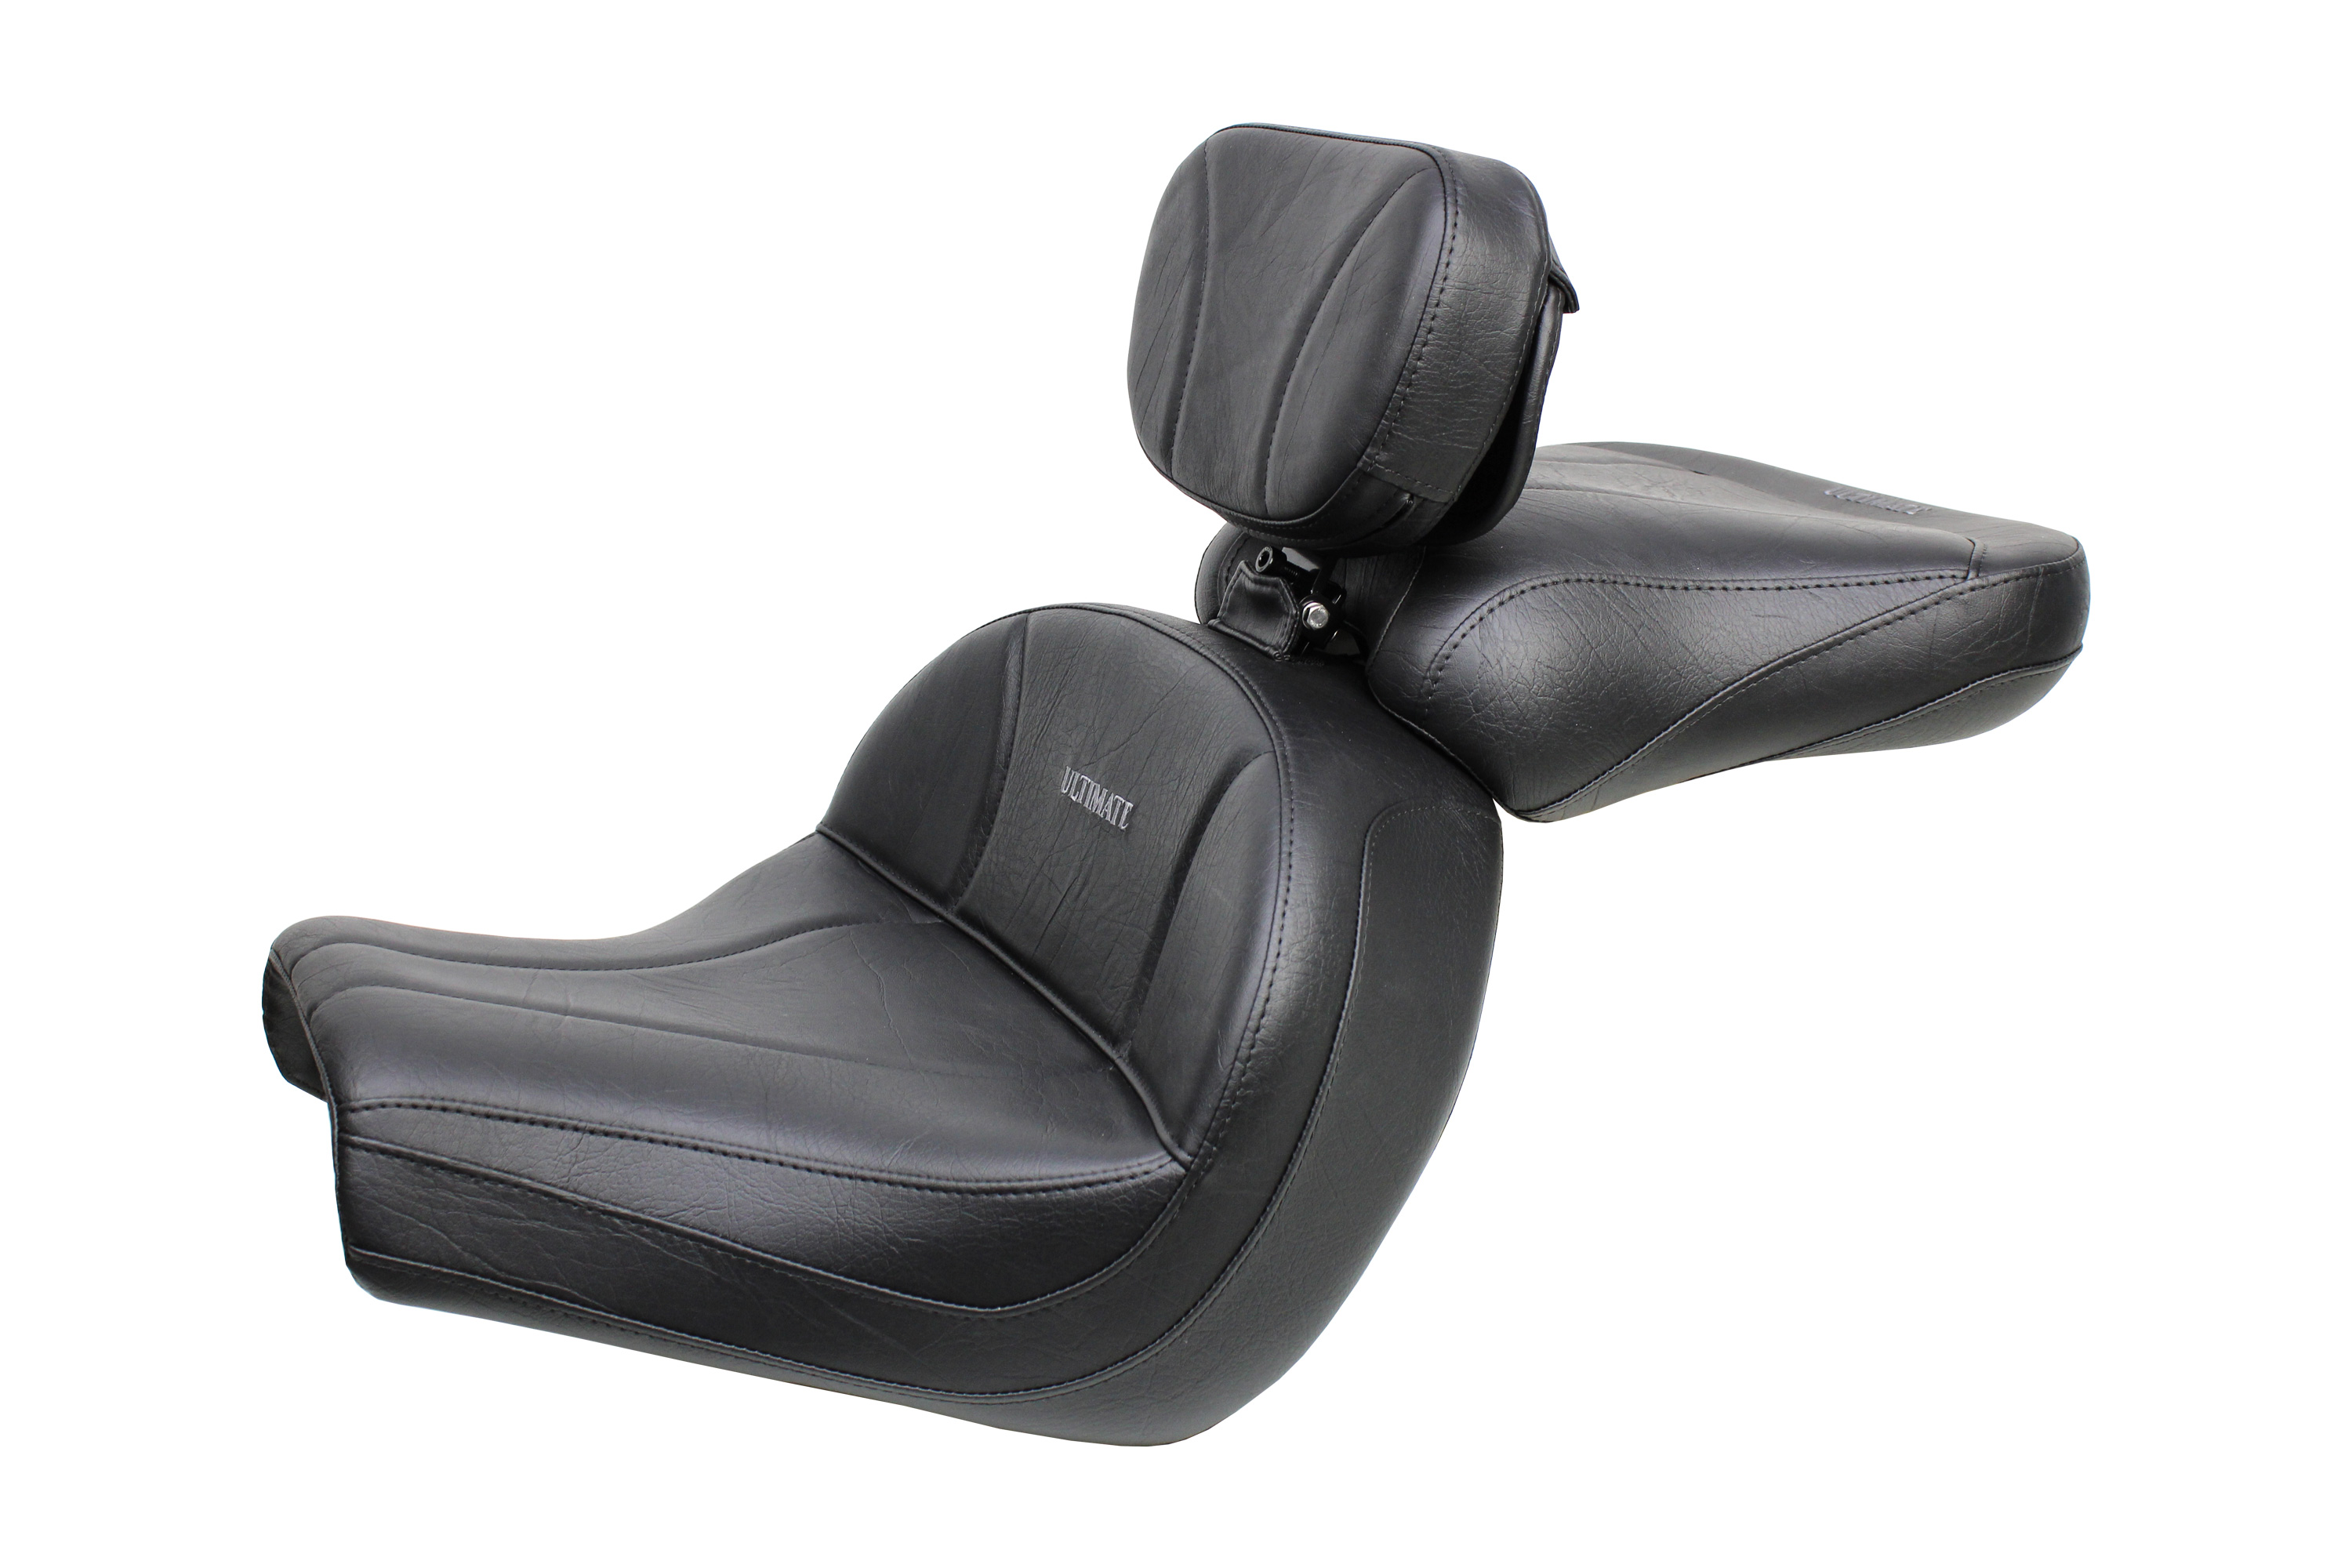 https://ultimateseats.ca/image/catalog/ultimate-lowrider-seat-passenger-seat-and-driver-backrest-for-vtx-1300-c-1.jpg